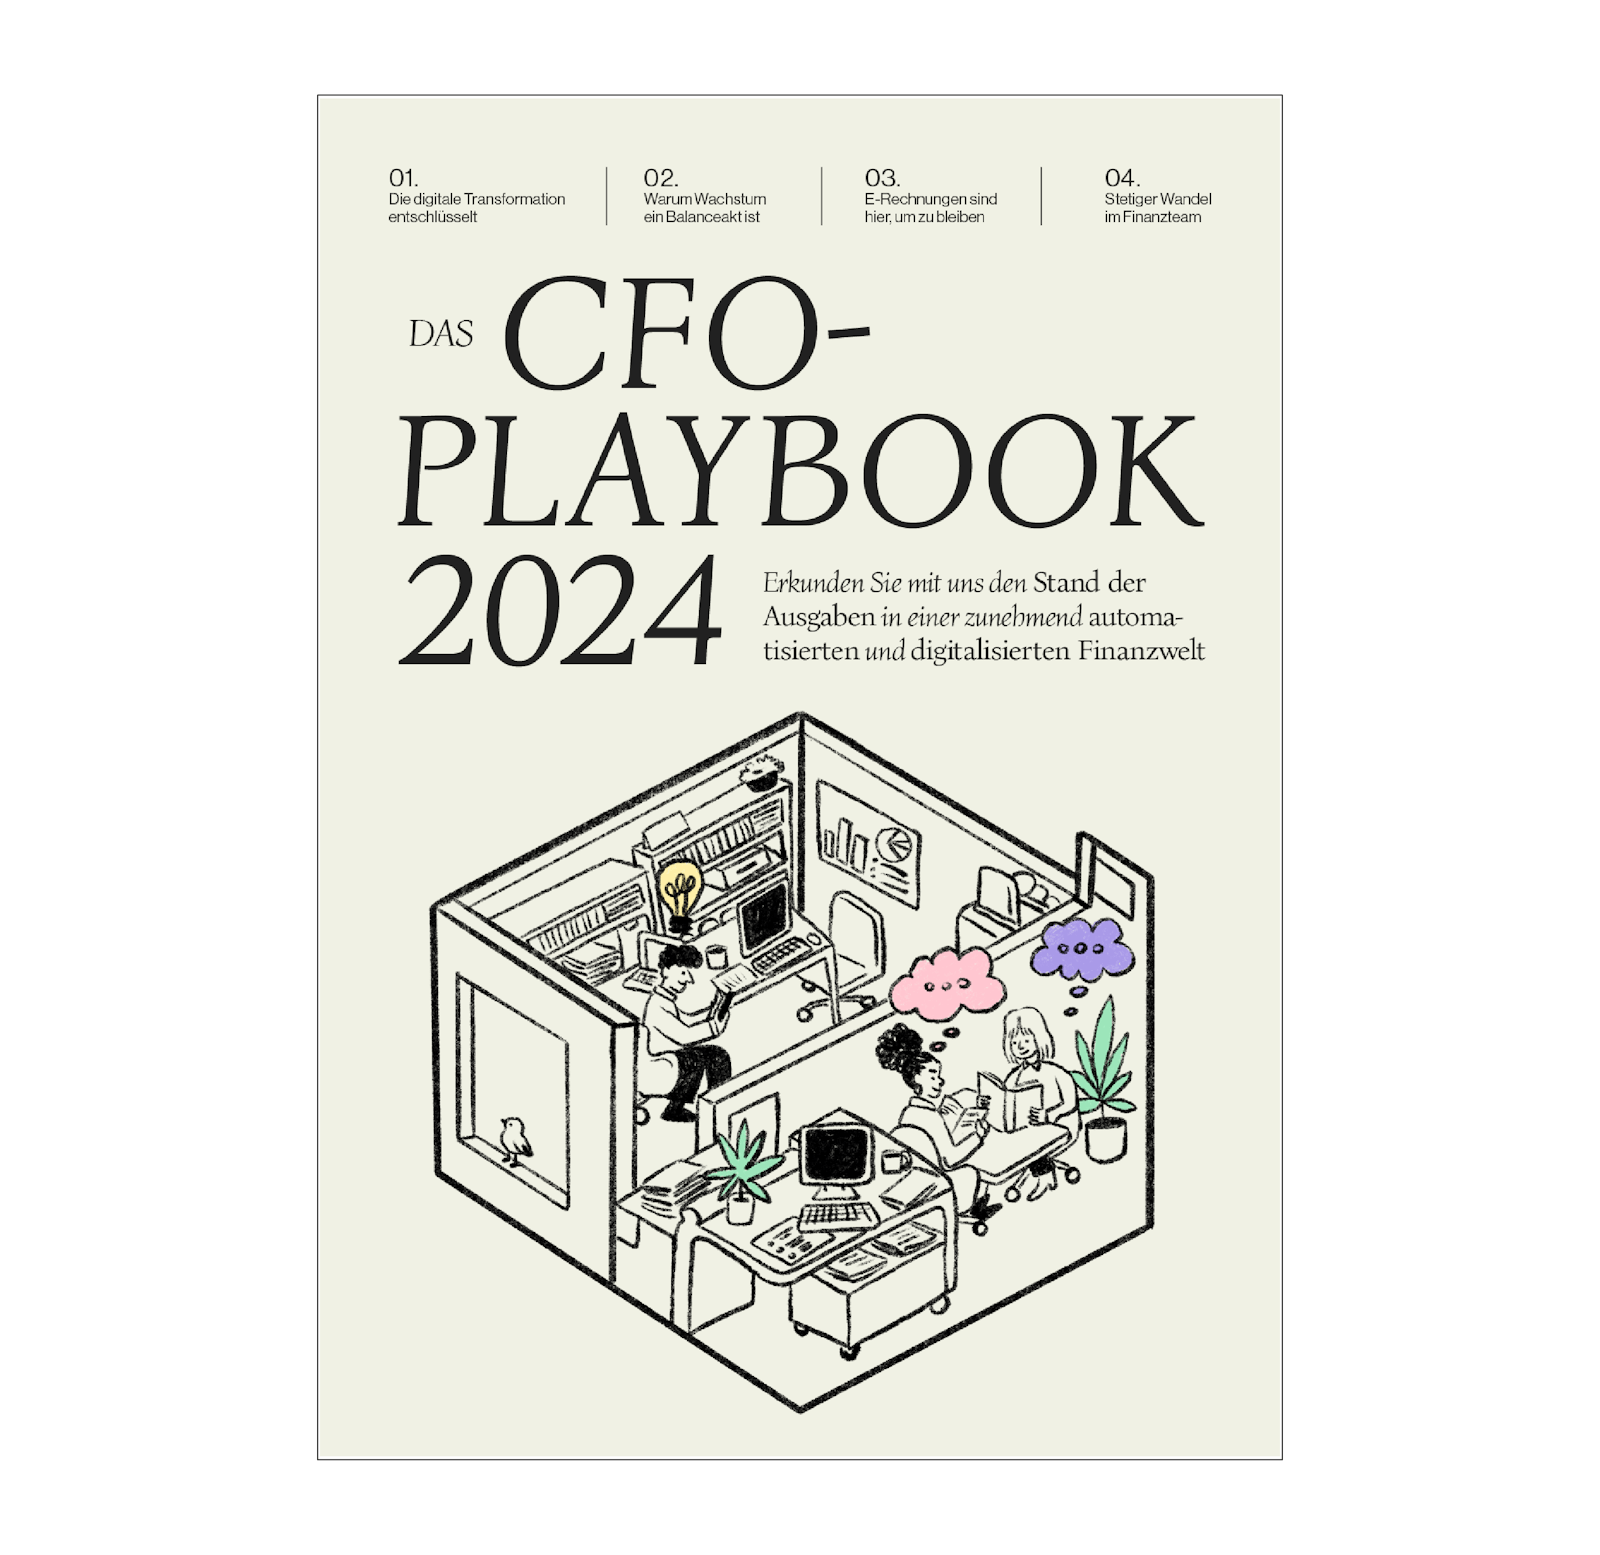 Das CFO playbook 2024